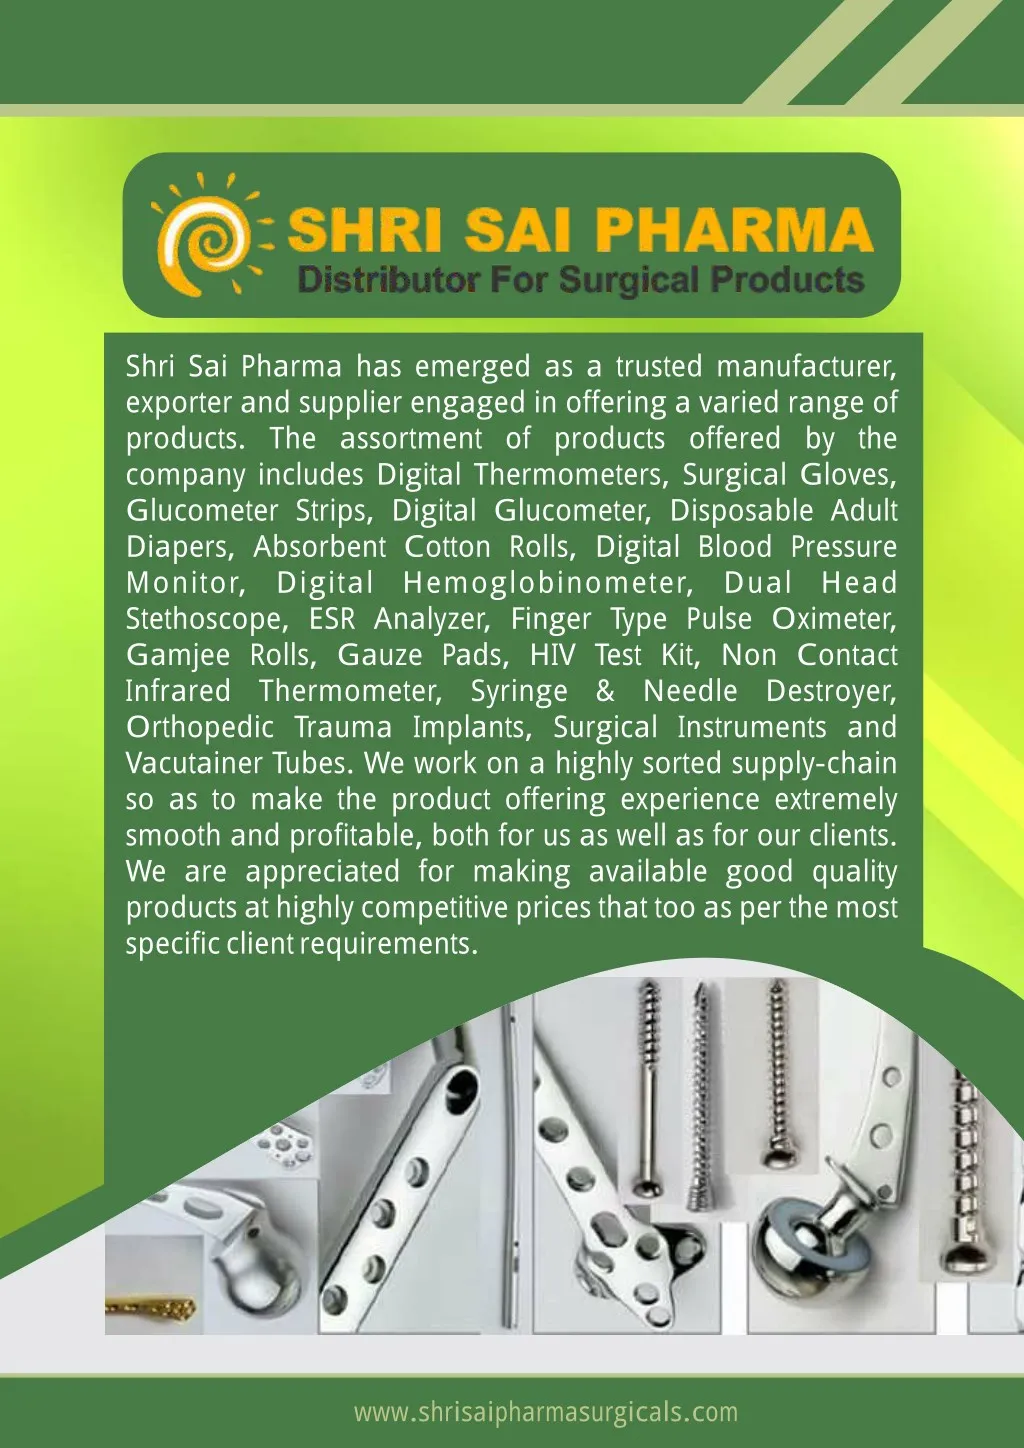 shri sai pharma has emerged as a trusted